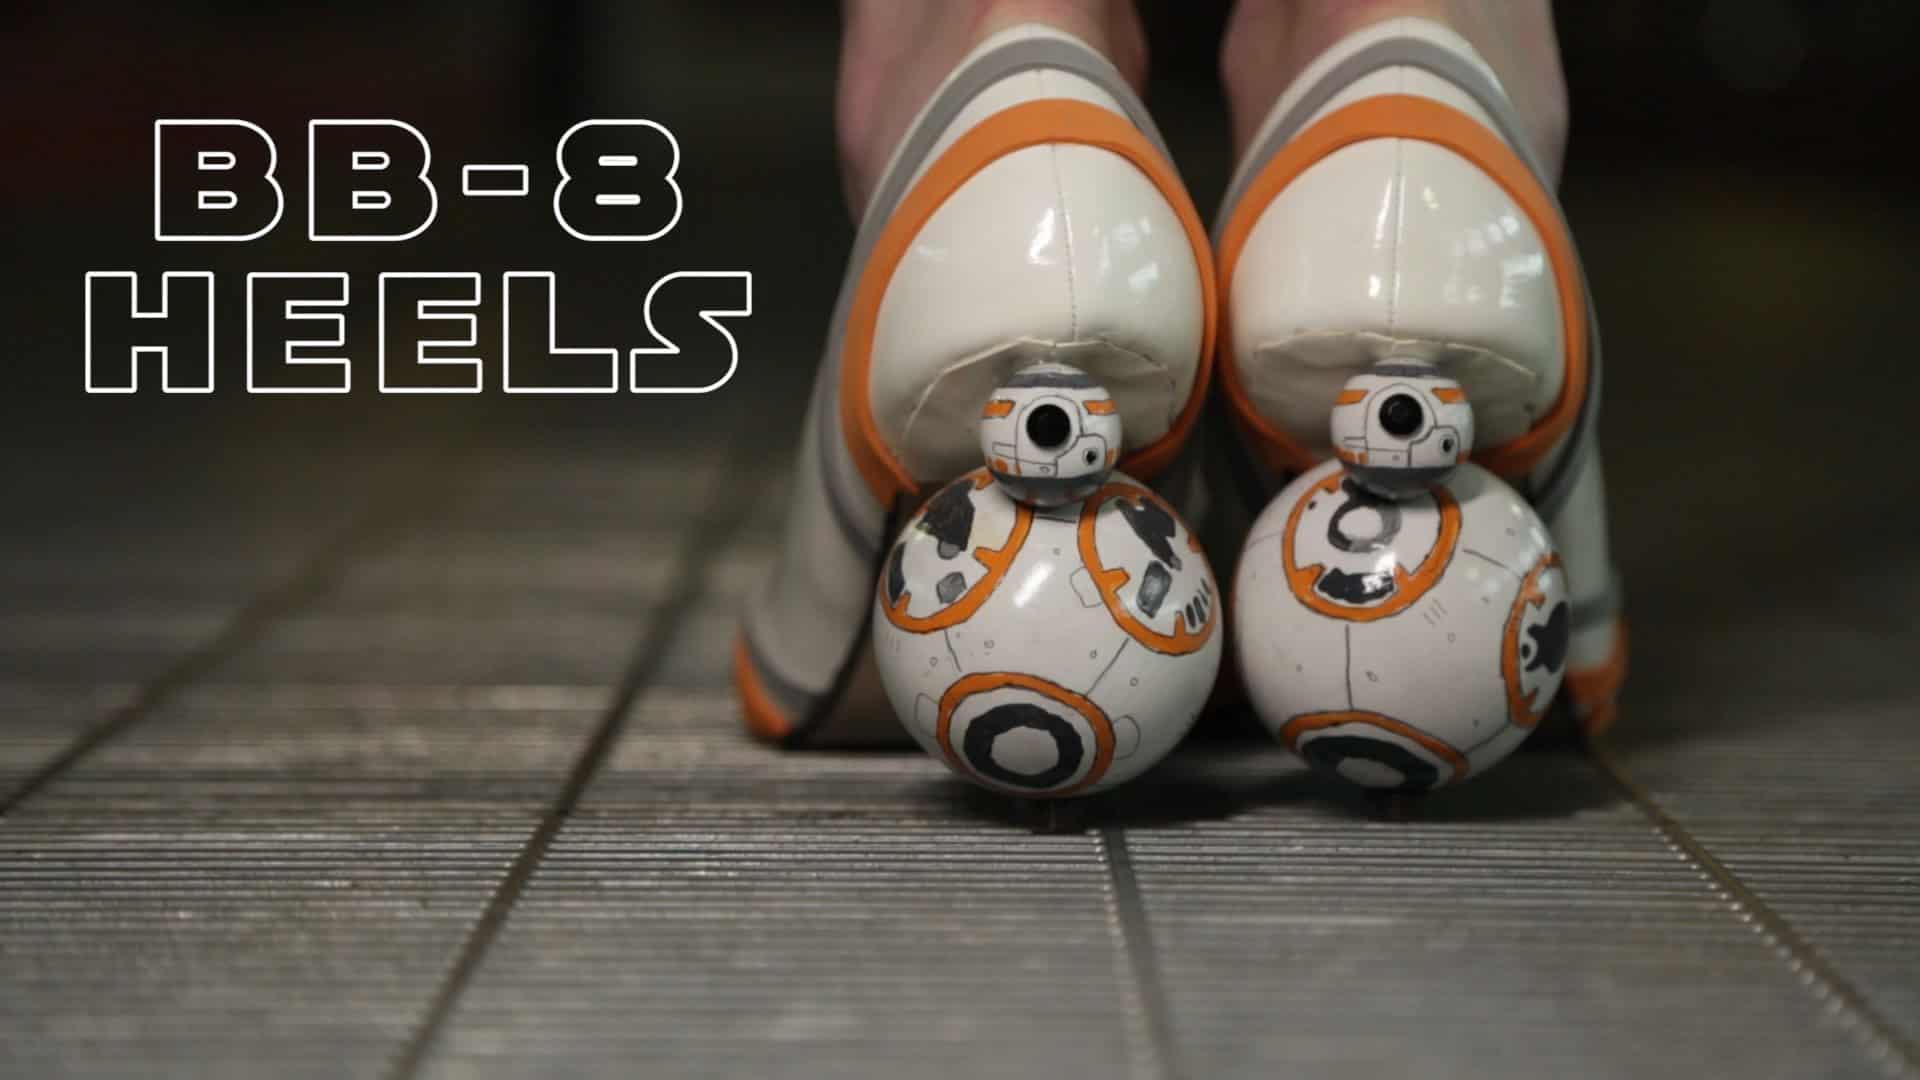 Star Wars BB-8 high heels